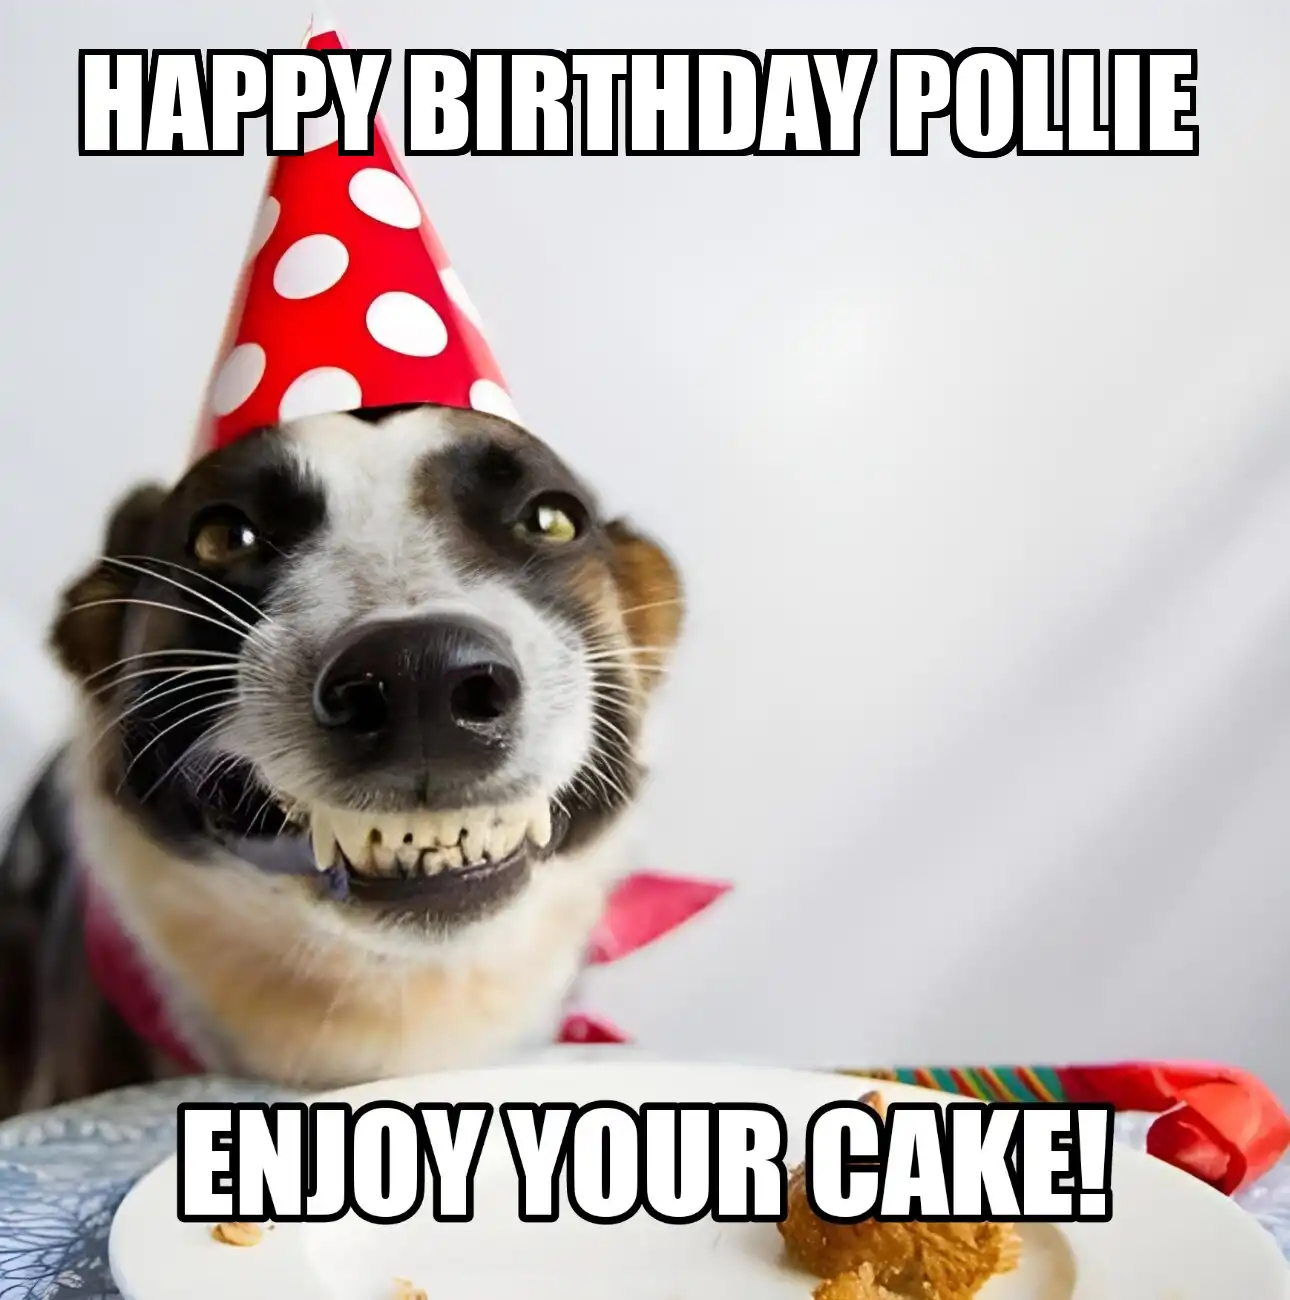 Happy Birthday Pollie Enjoy Your Cake Dog Meme